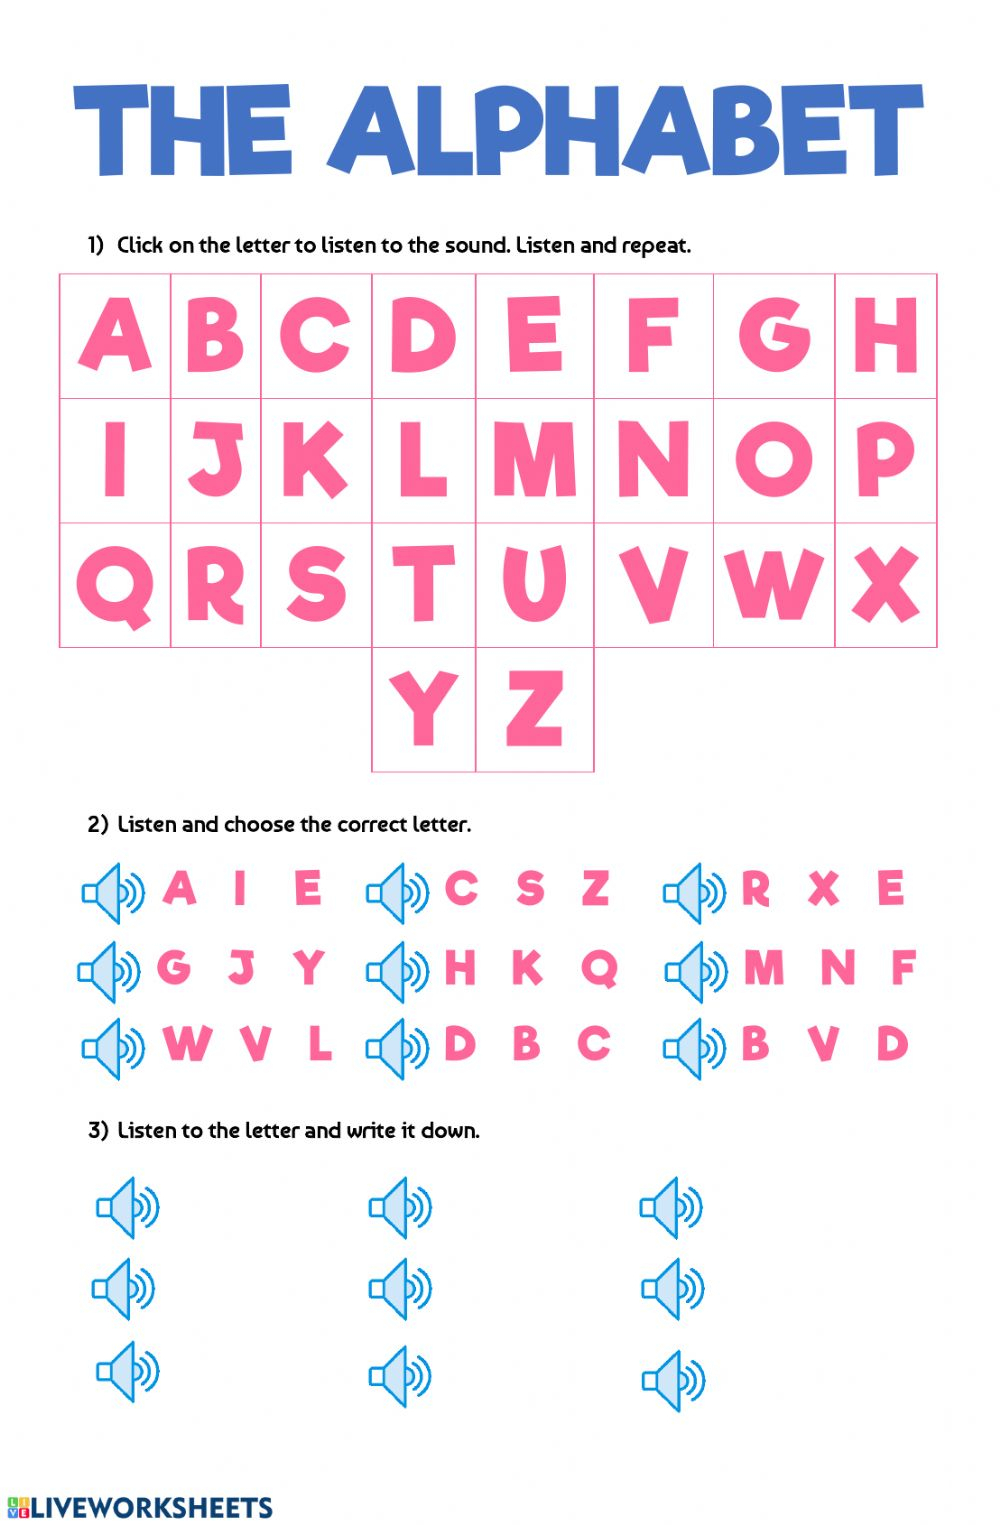 The Alphabet Worksheet intended for Alphabet Worksheets For Adults